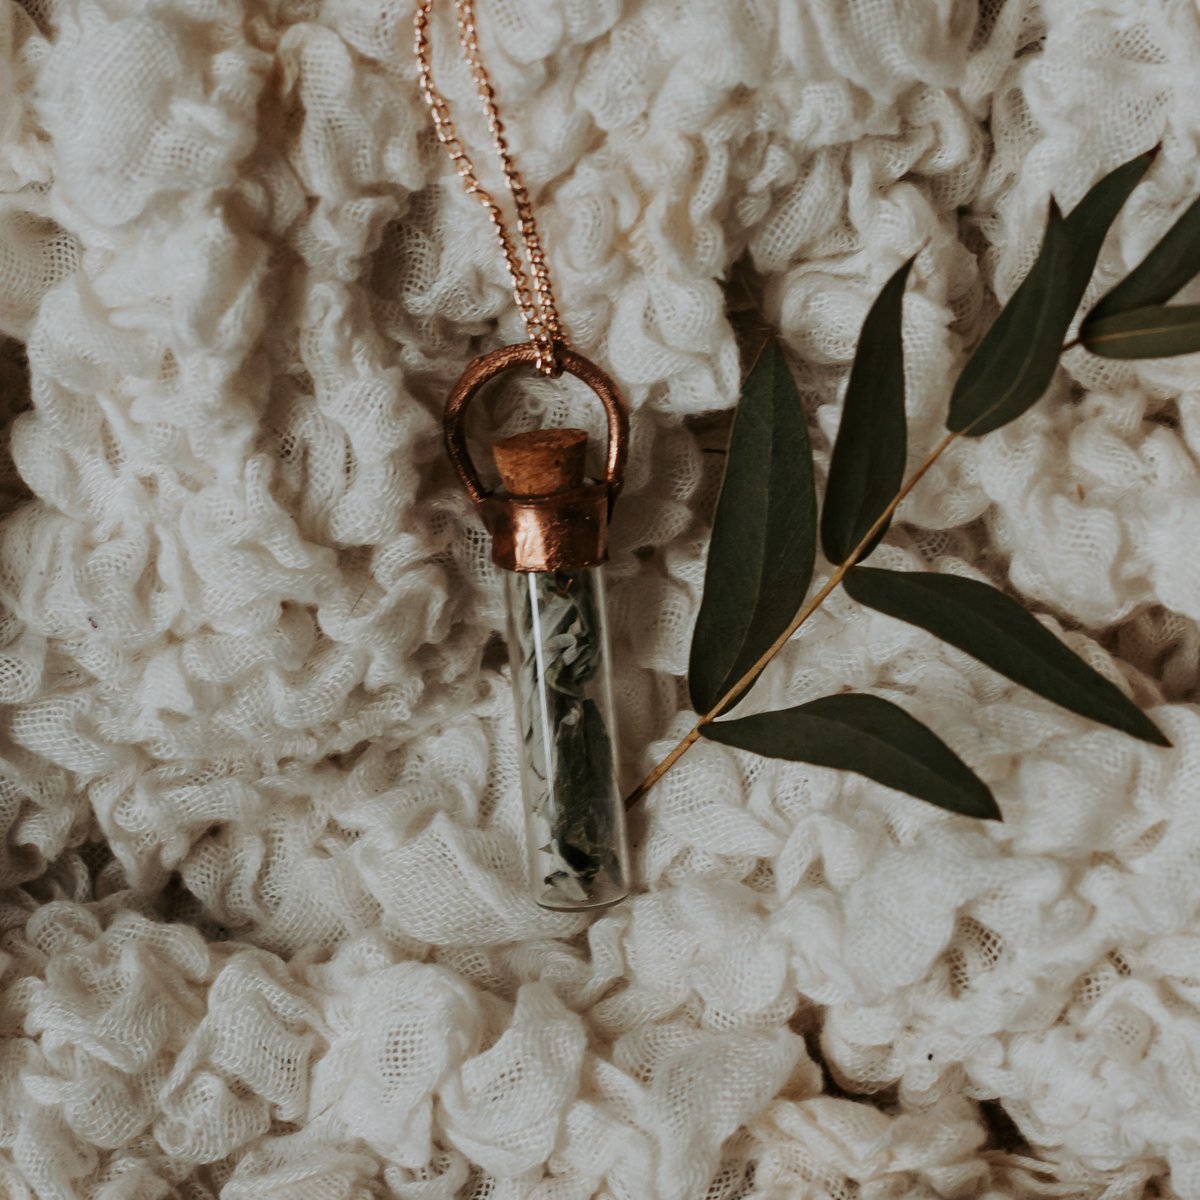 Image of Copper + Medicine Pendant (with chain)